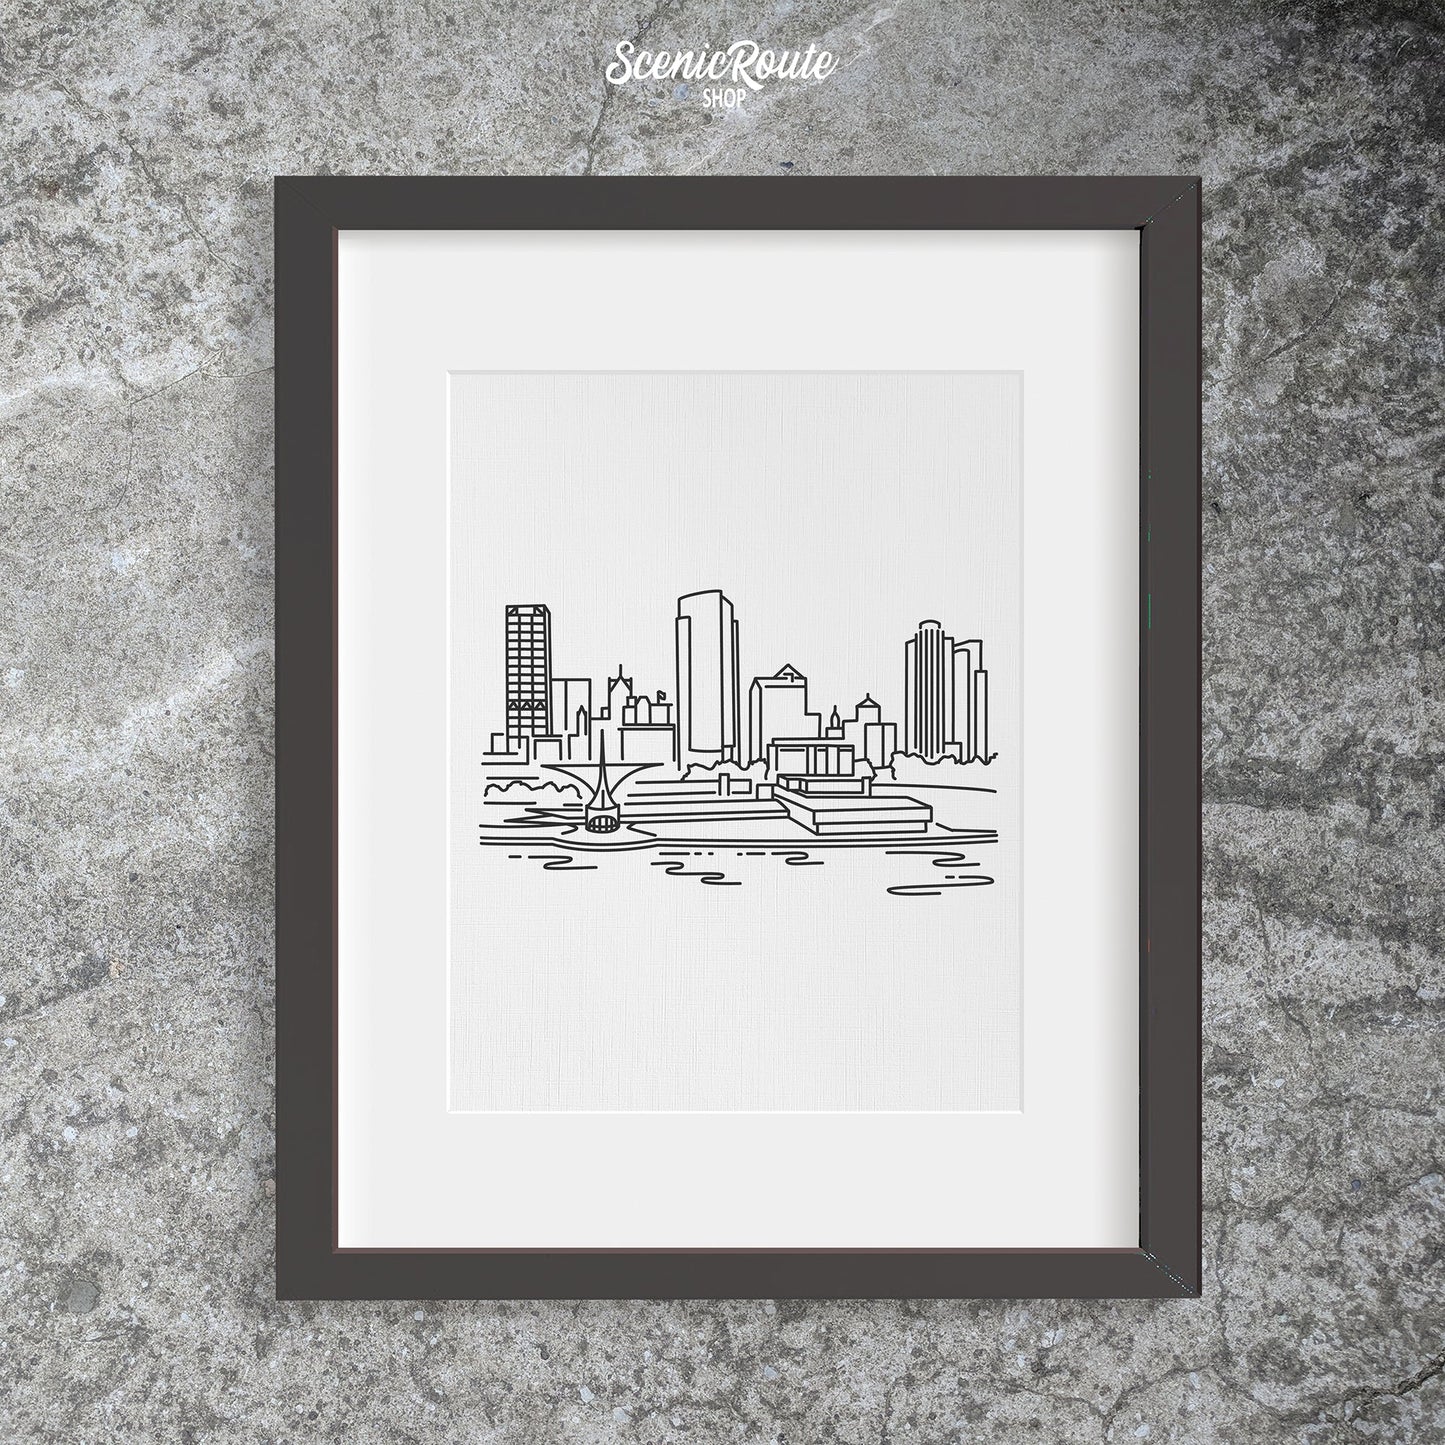 A framed line art drawing of the Milwaukee Skyline